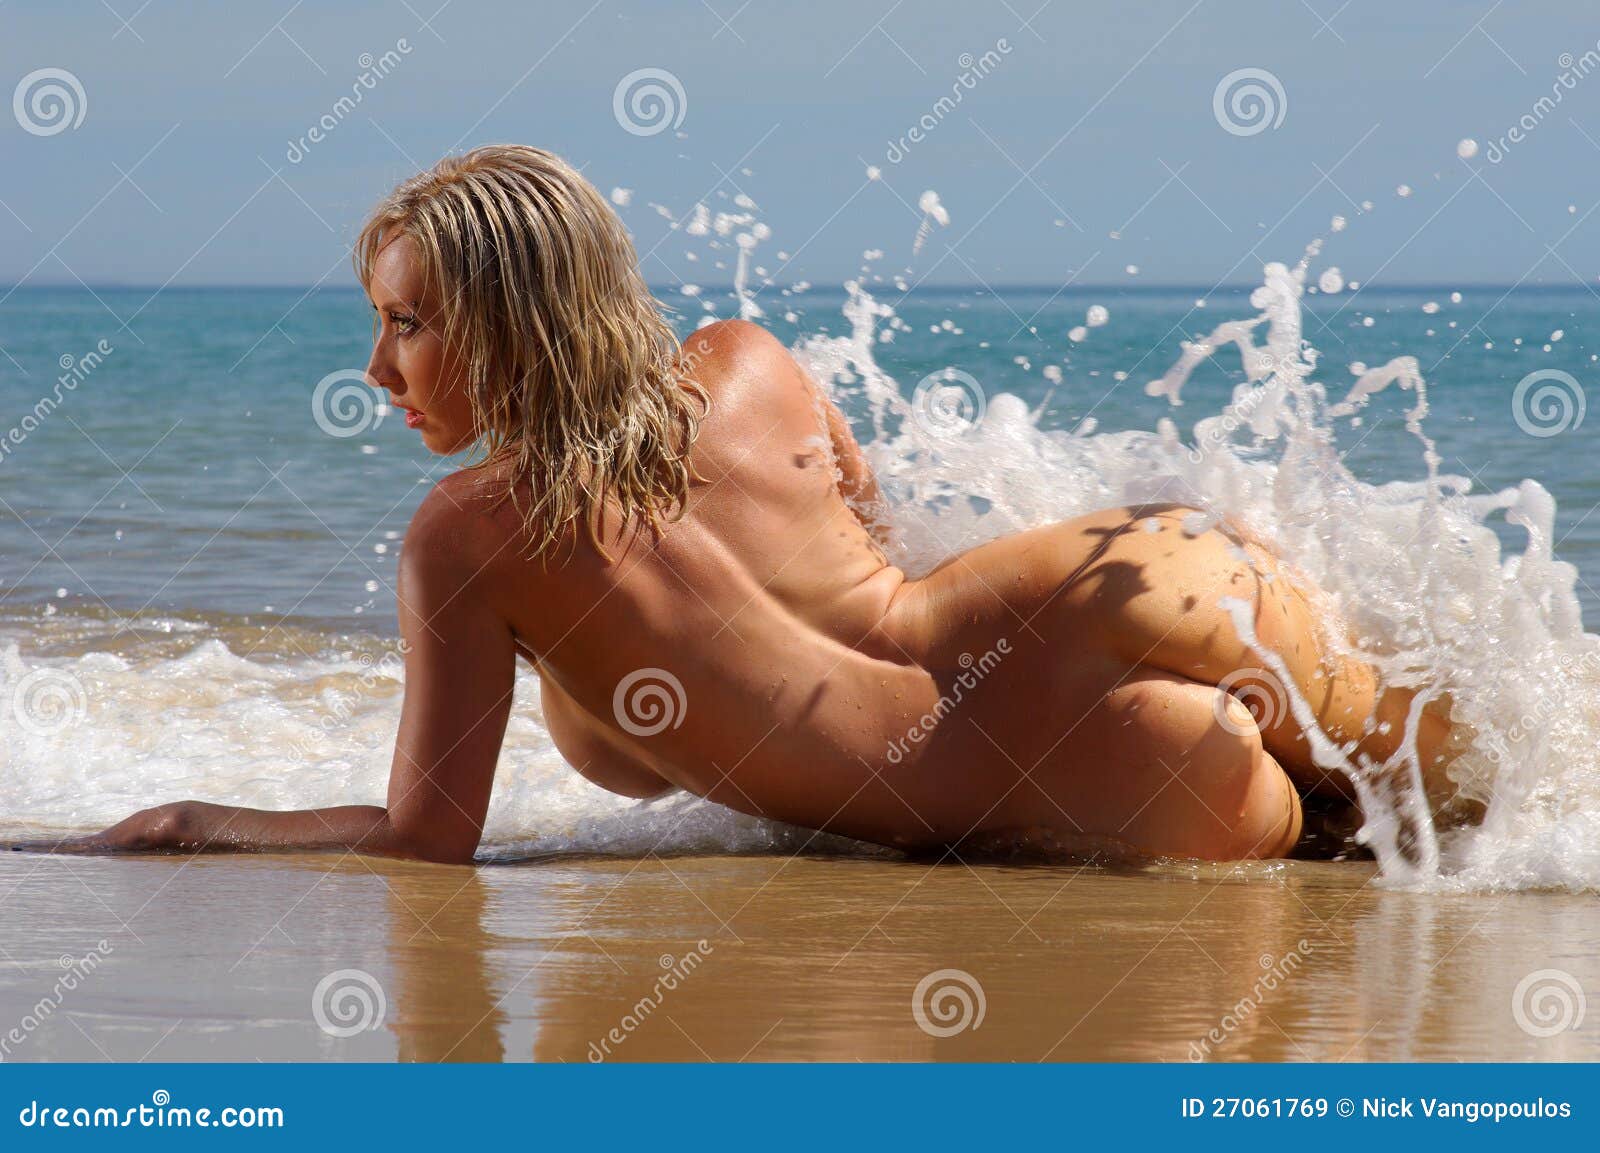 nude sexy girls in beach free photo